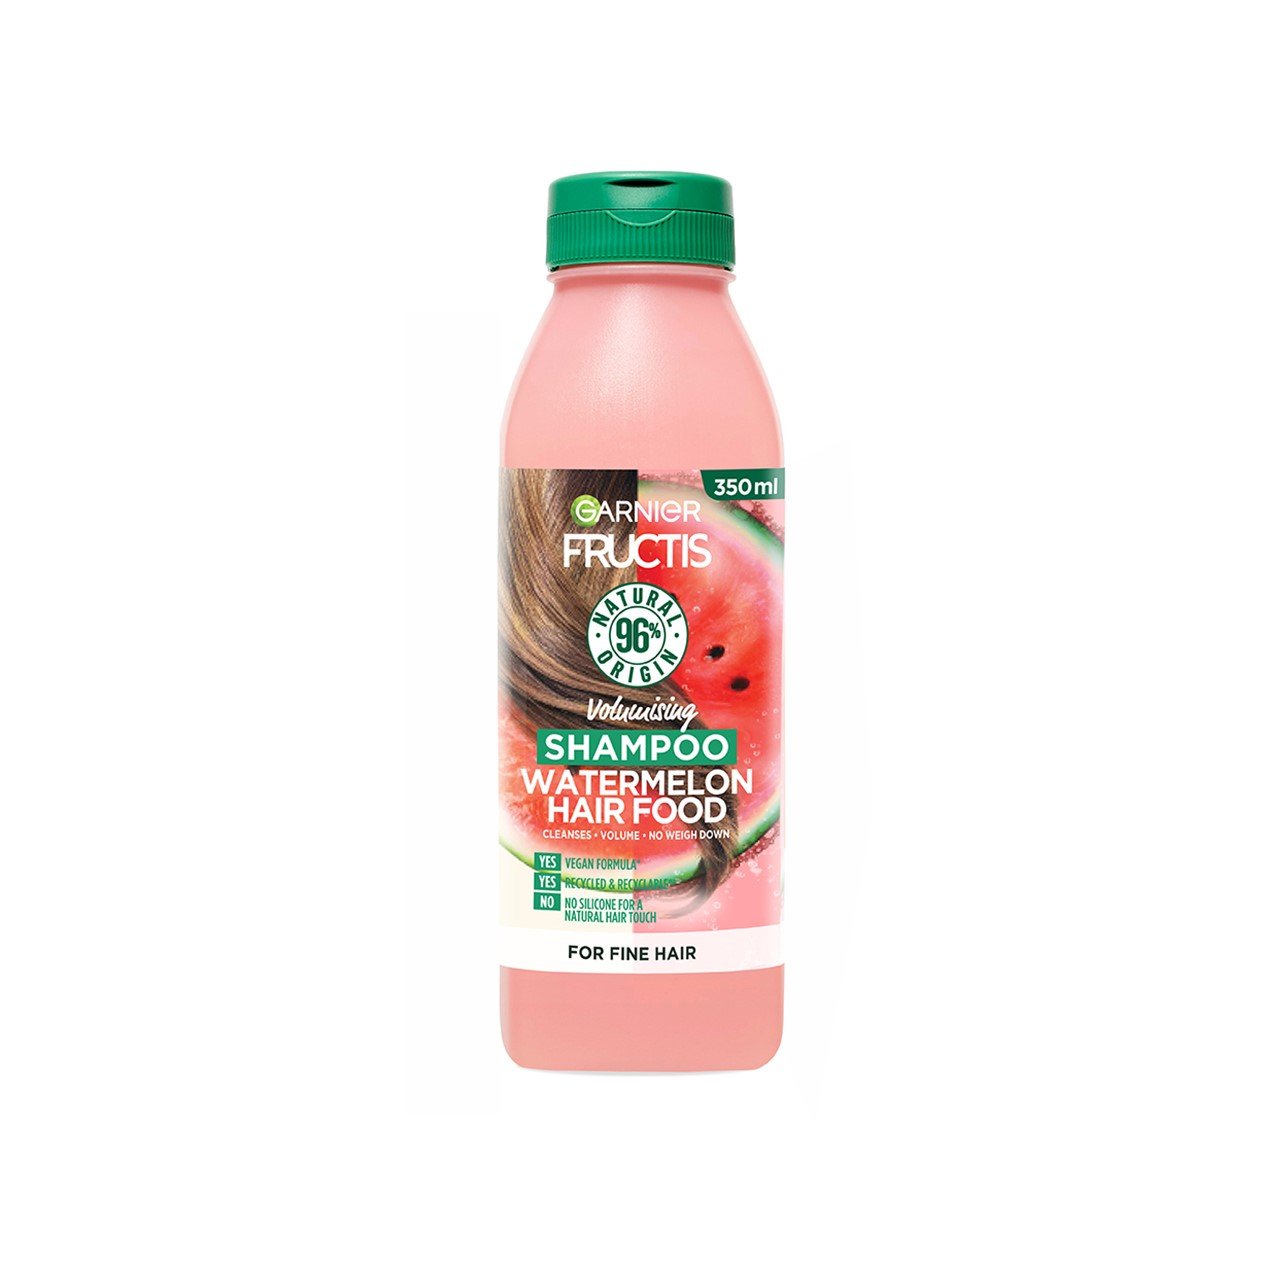 Garnier Fructis Hair Food Watermelon Shampoo 350ml (11.8 fl oz)